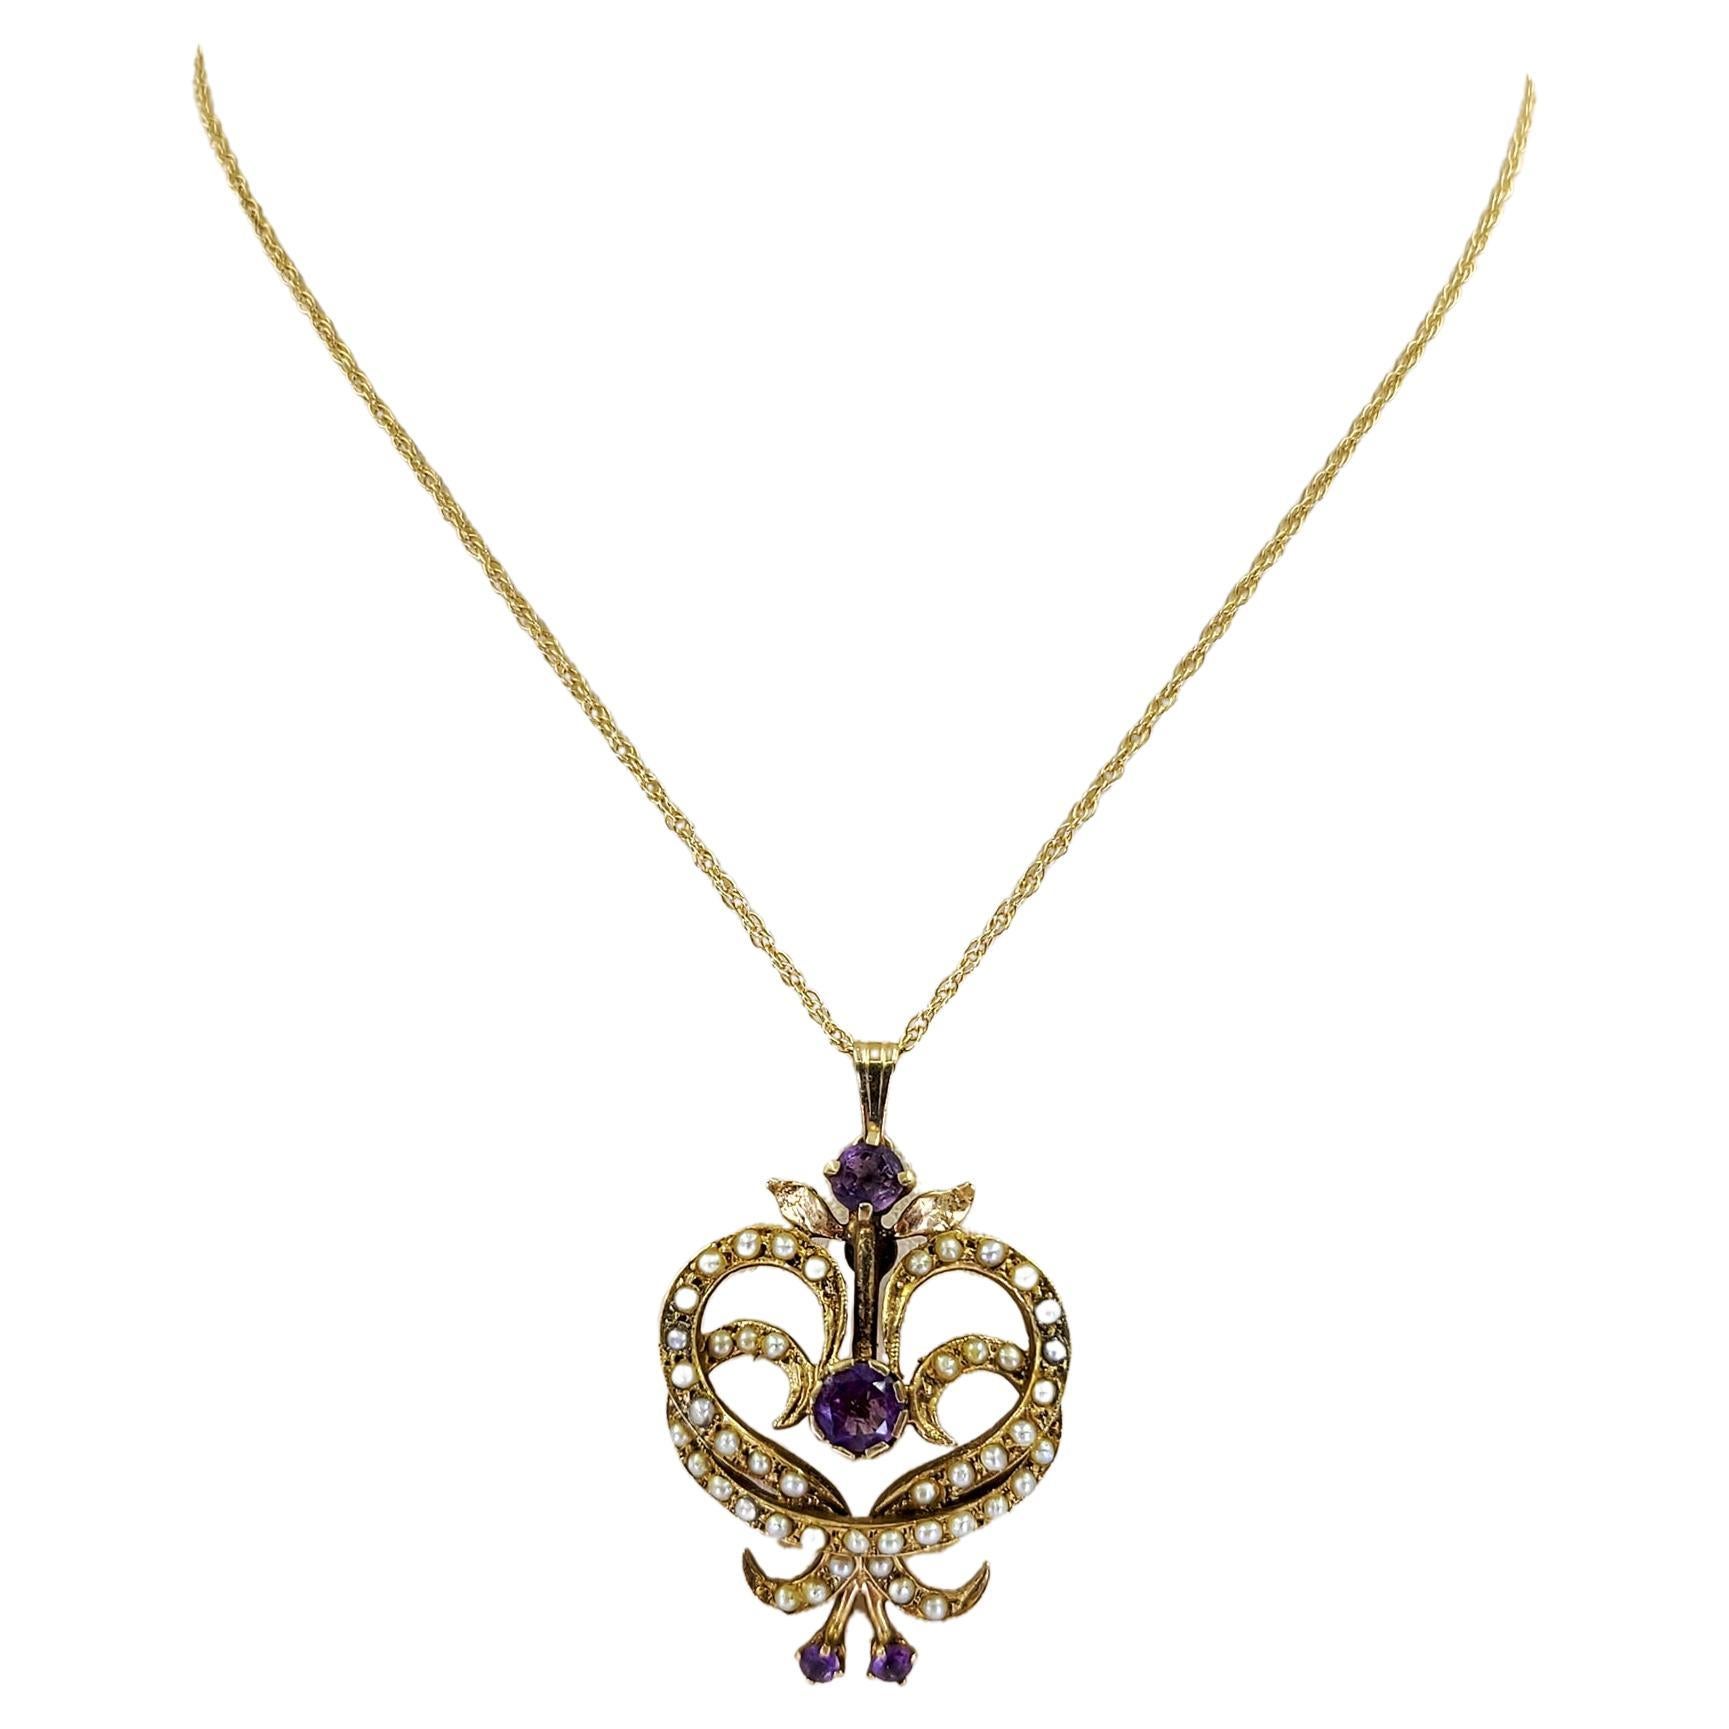 Art Nouveau Pearl and Amethyst Pendant Necklace